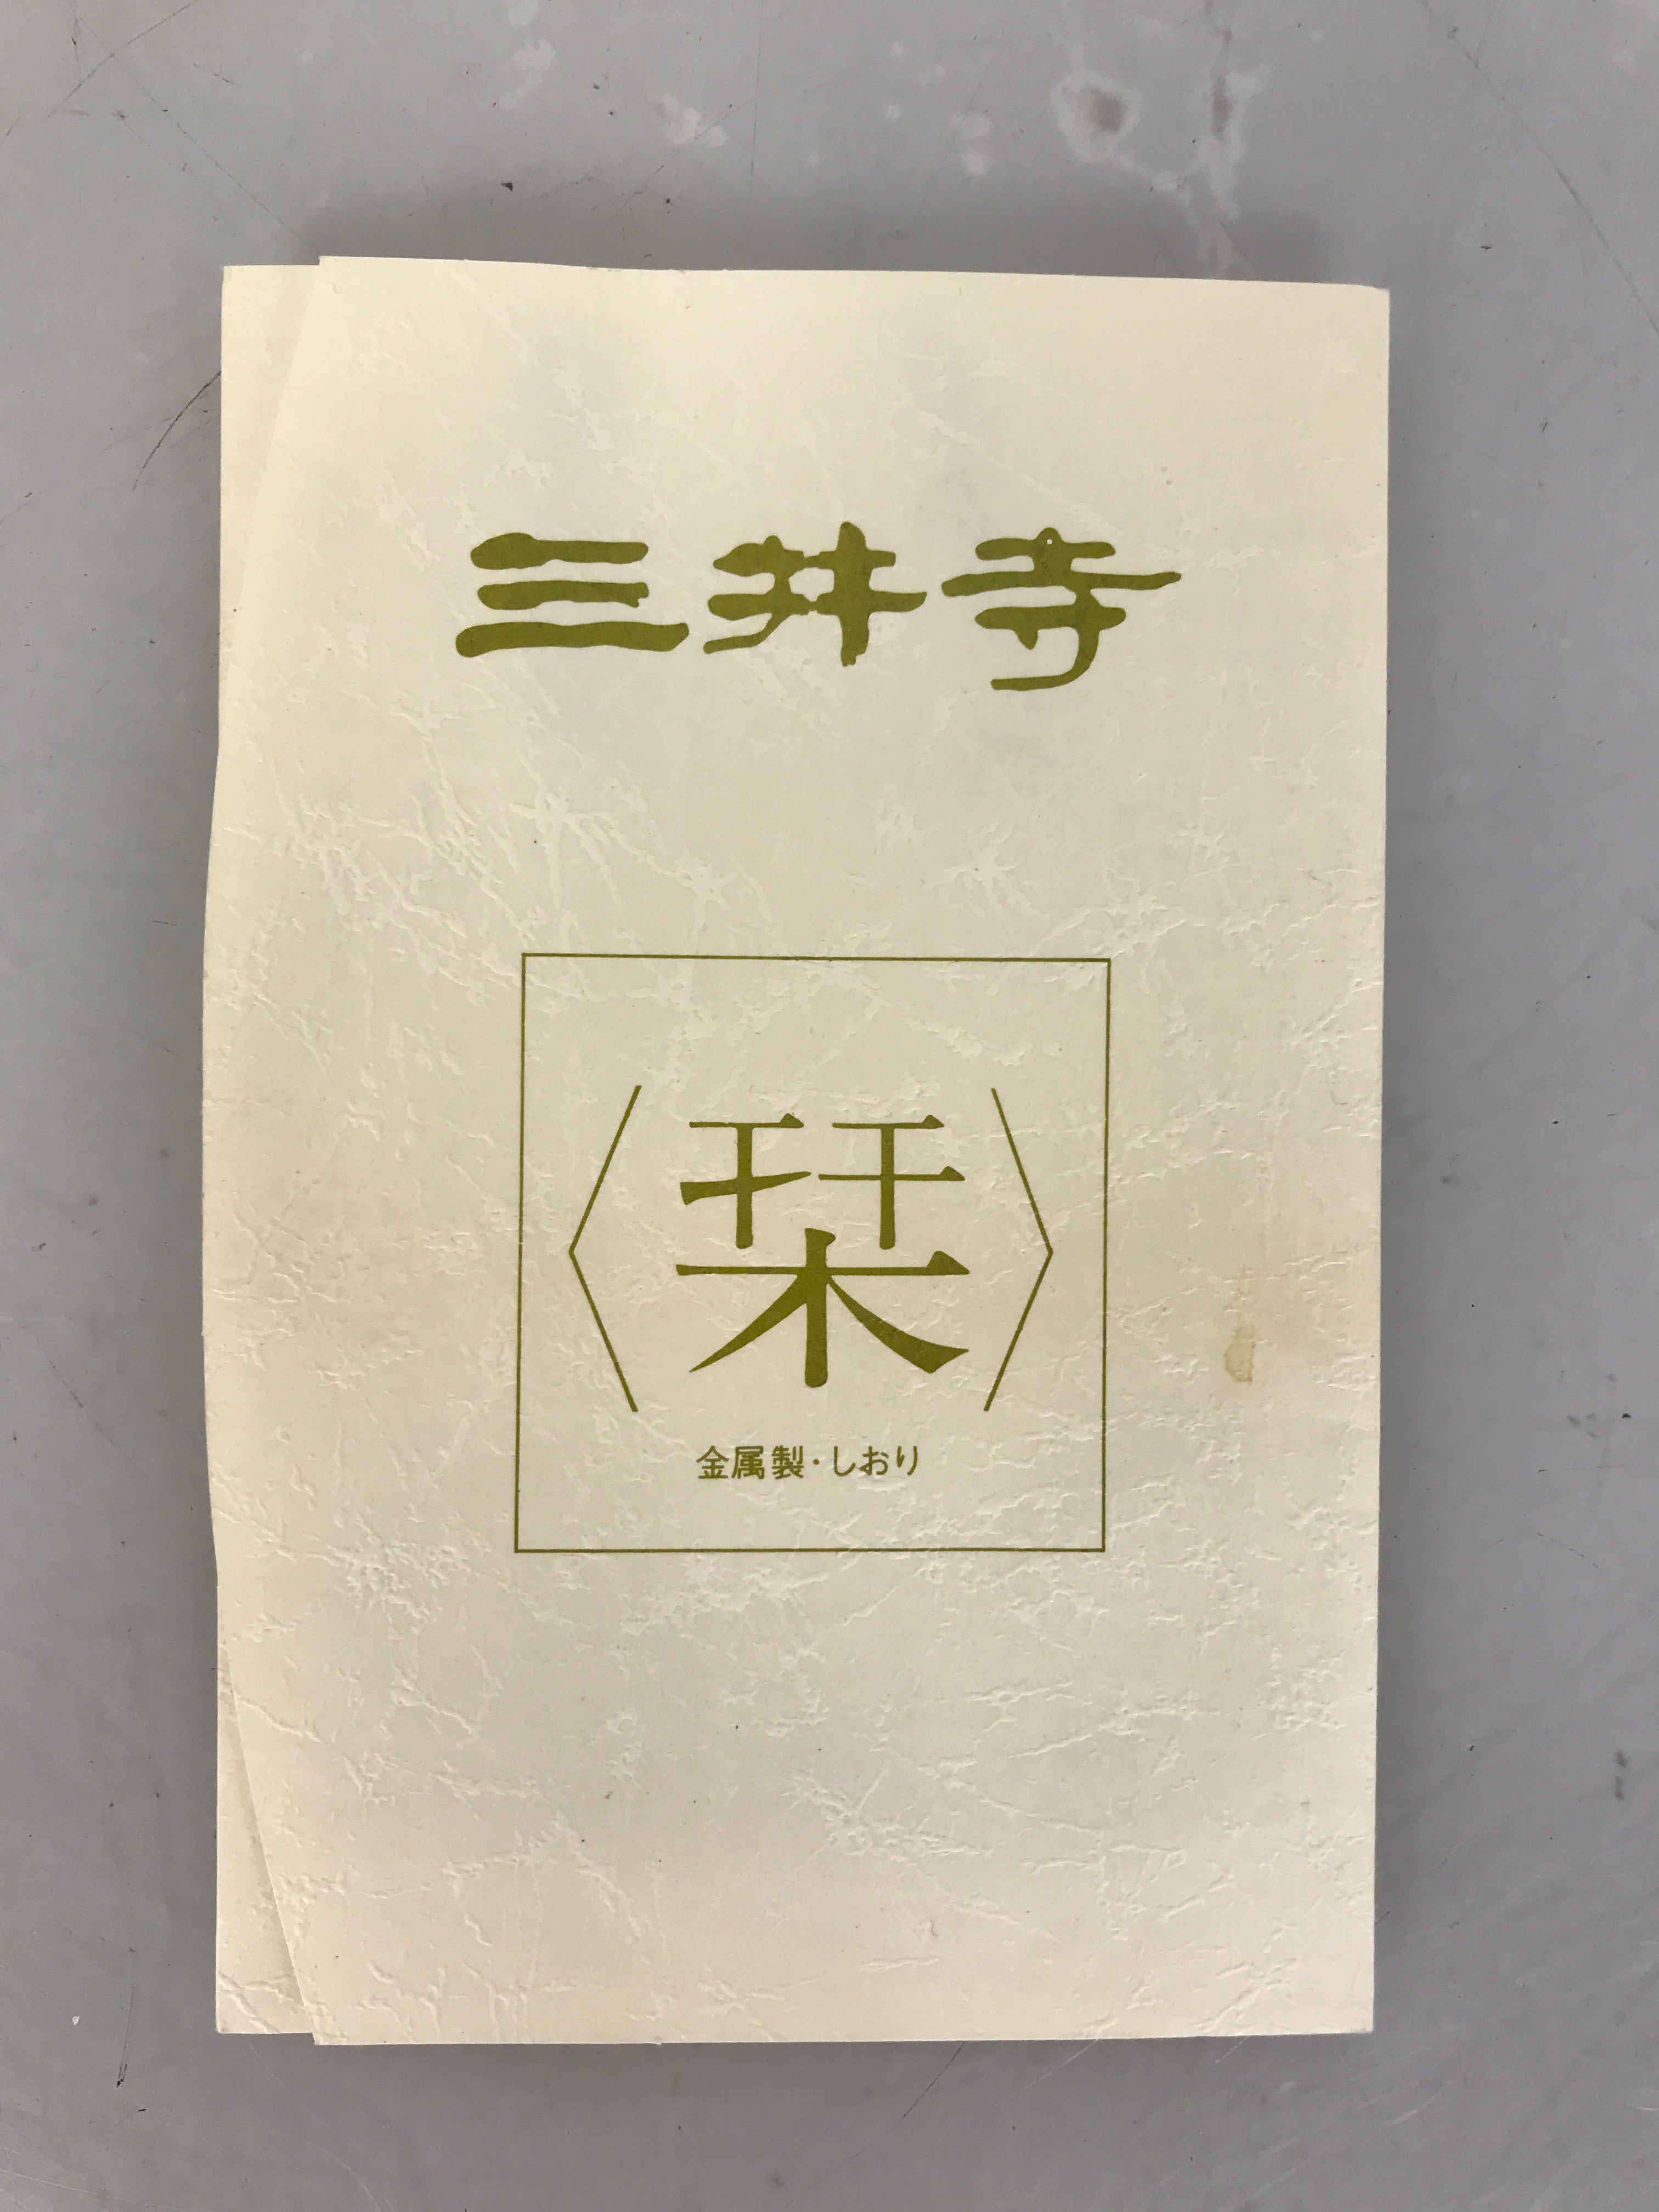 Set of 2 Japanese Metal Bookmarks